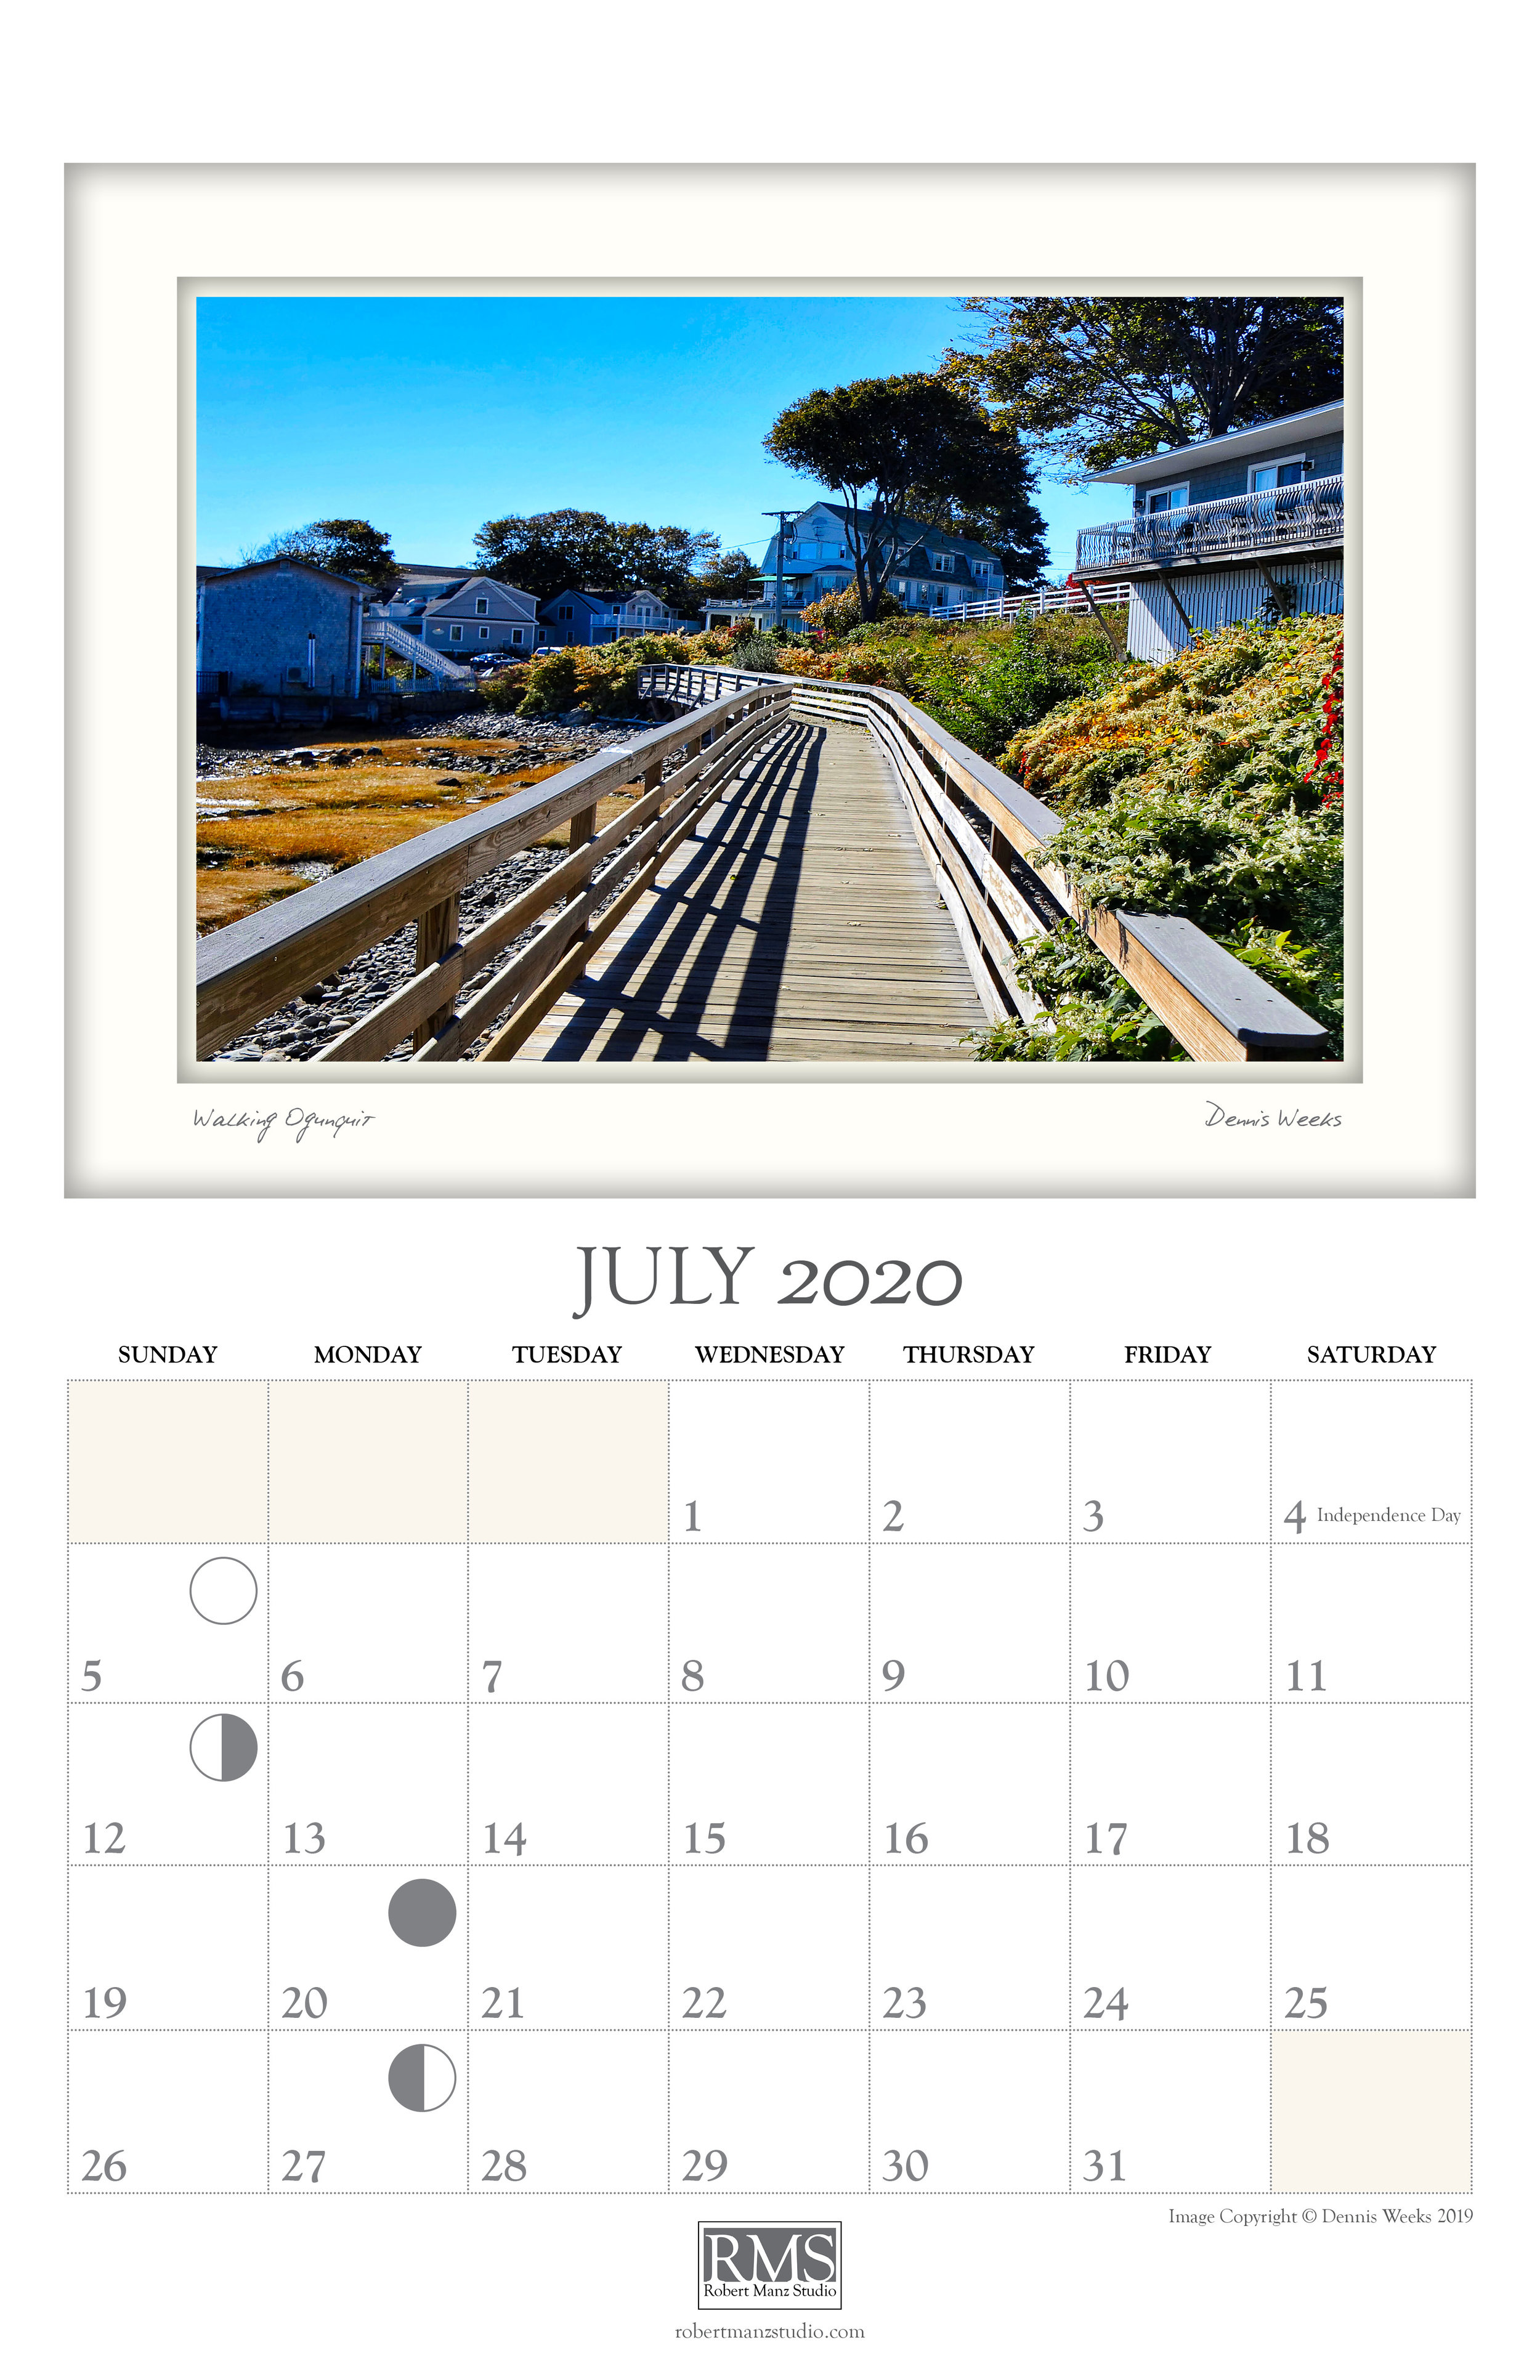 2020 calendar Ogunquit, Maine by Dennis Weeks and Robert Manz